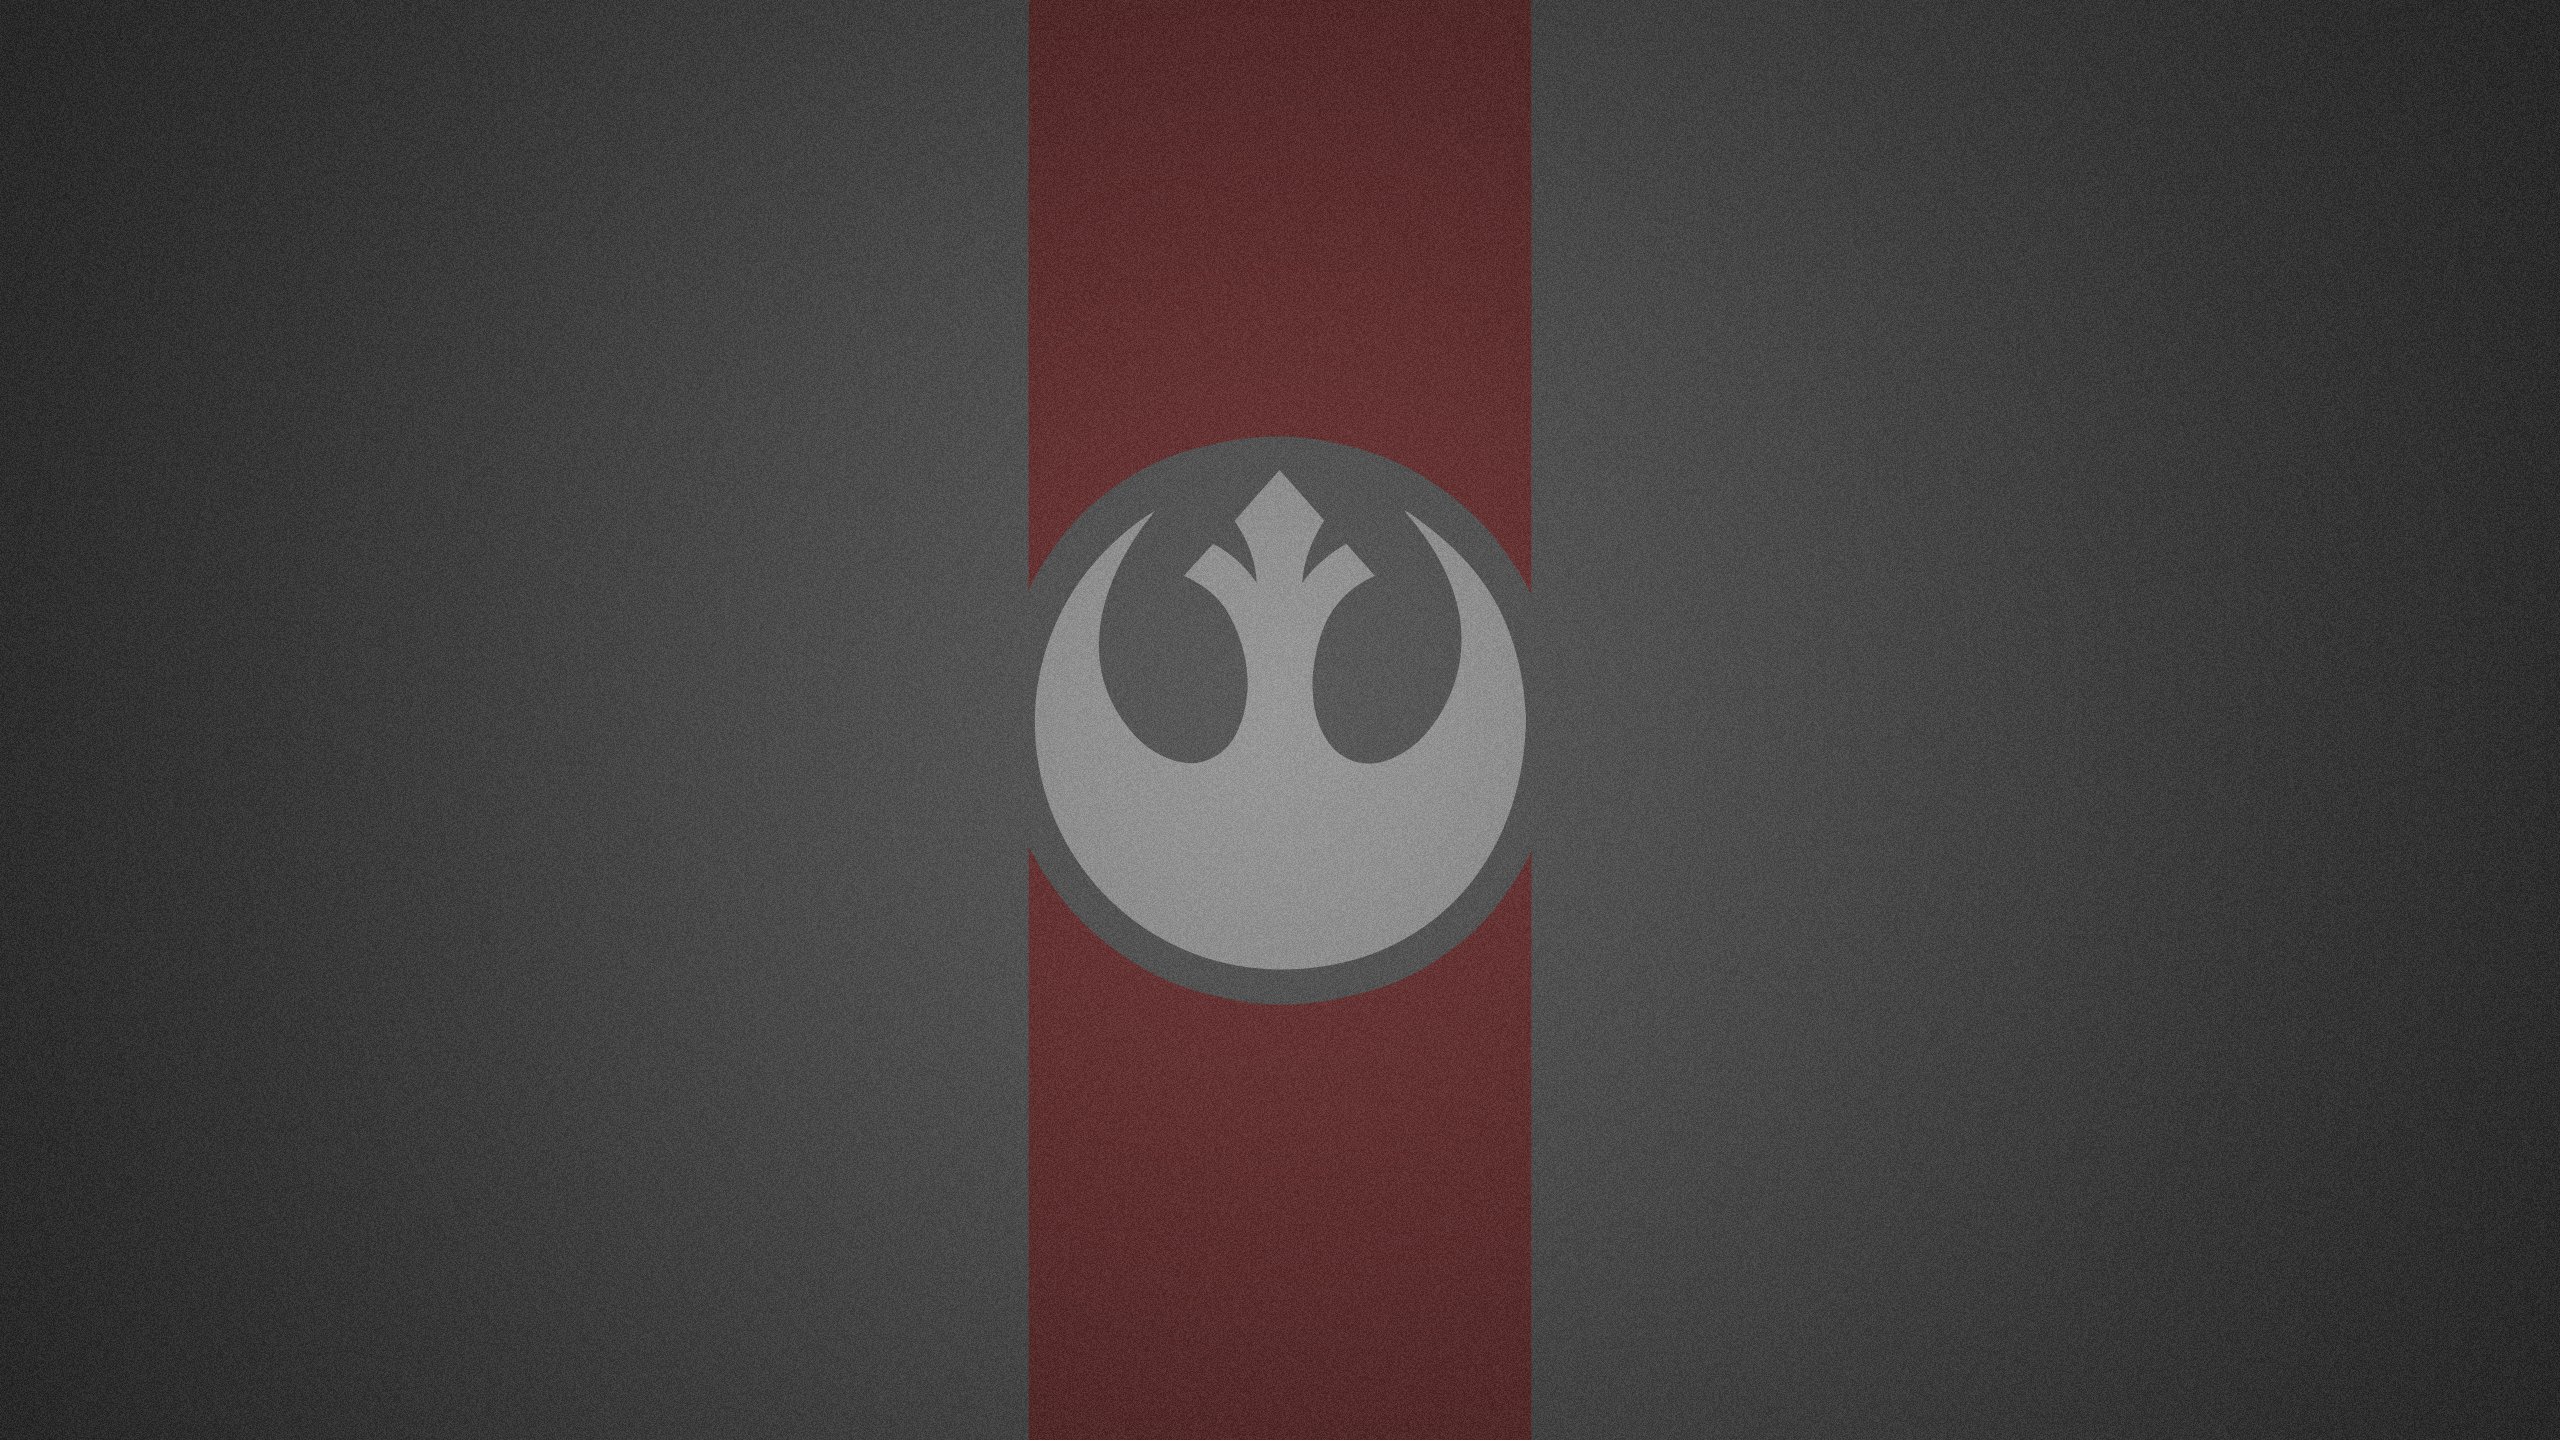 2560x1440 Star Wars Rebel Alliance Wallpapers Top Free Star Wars Rebel Alliance Backgrounds